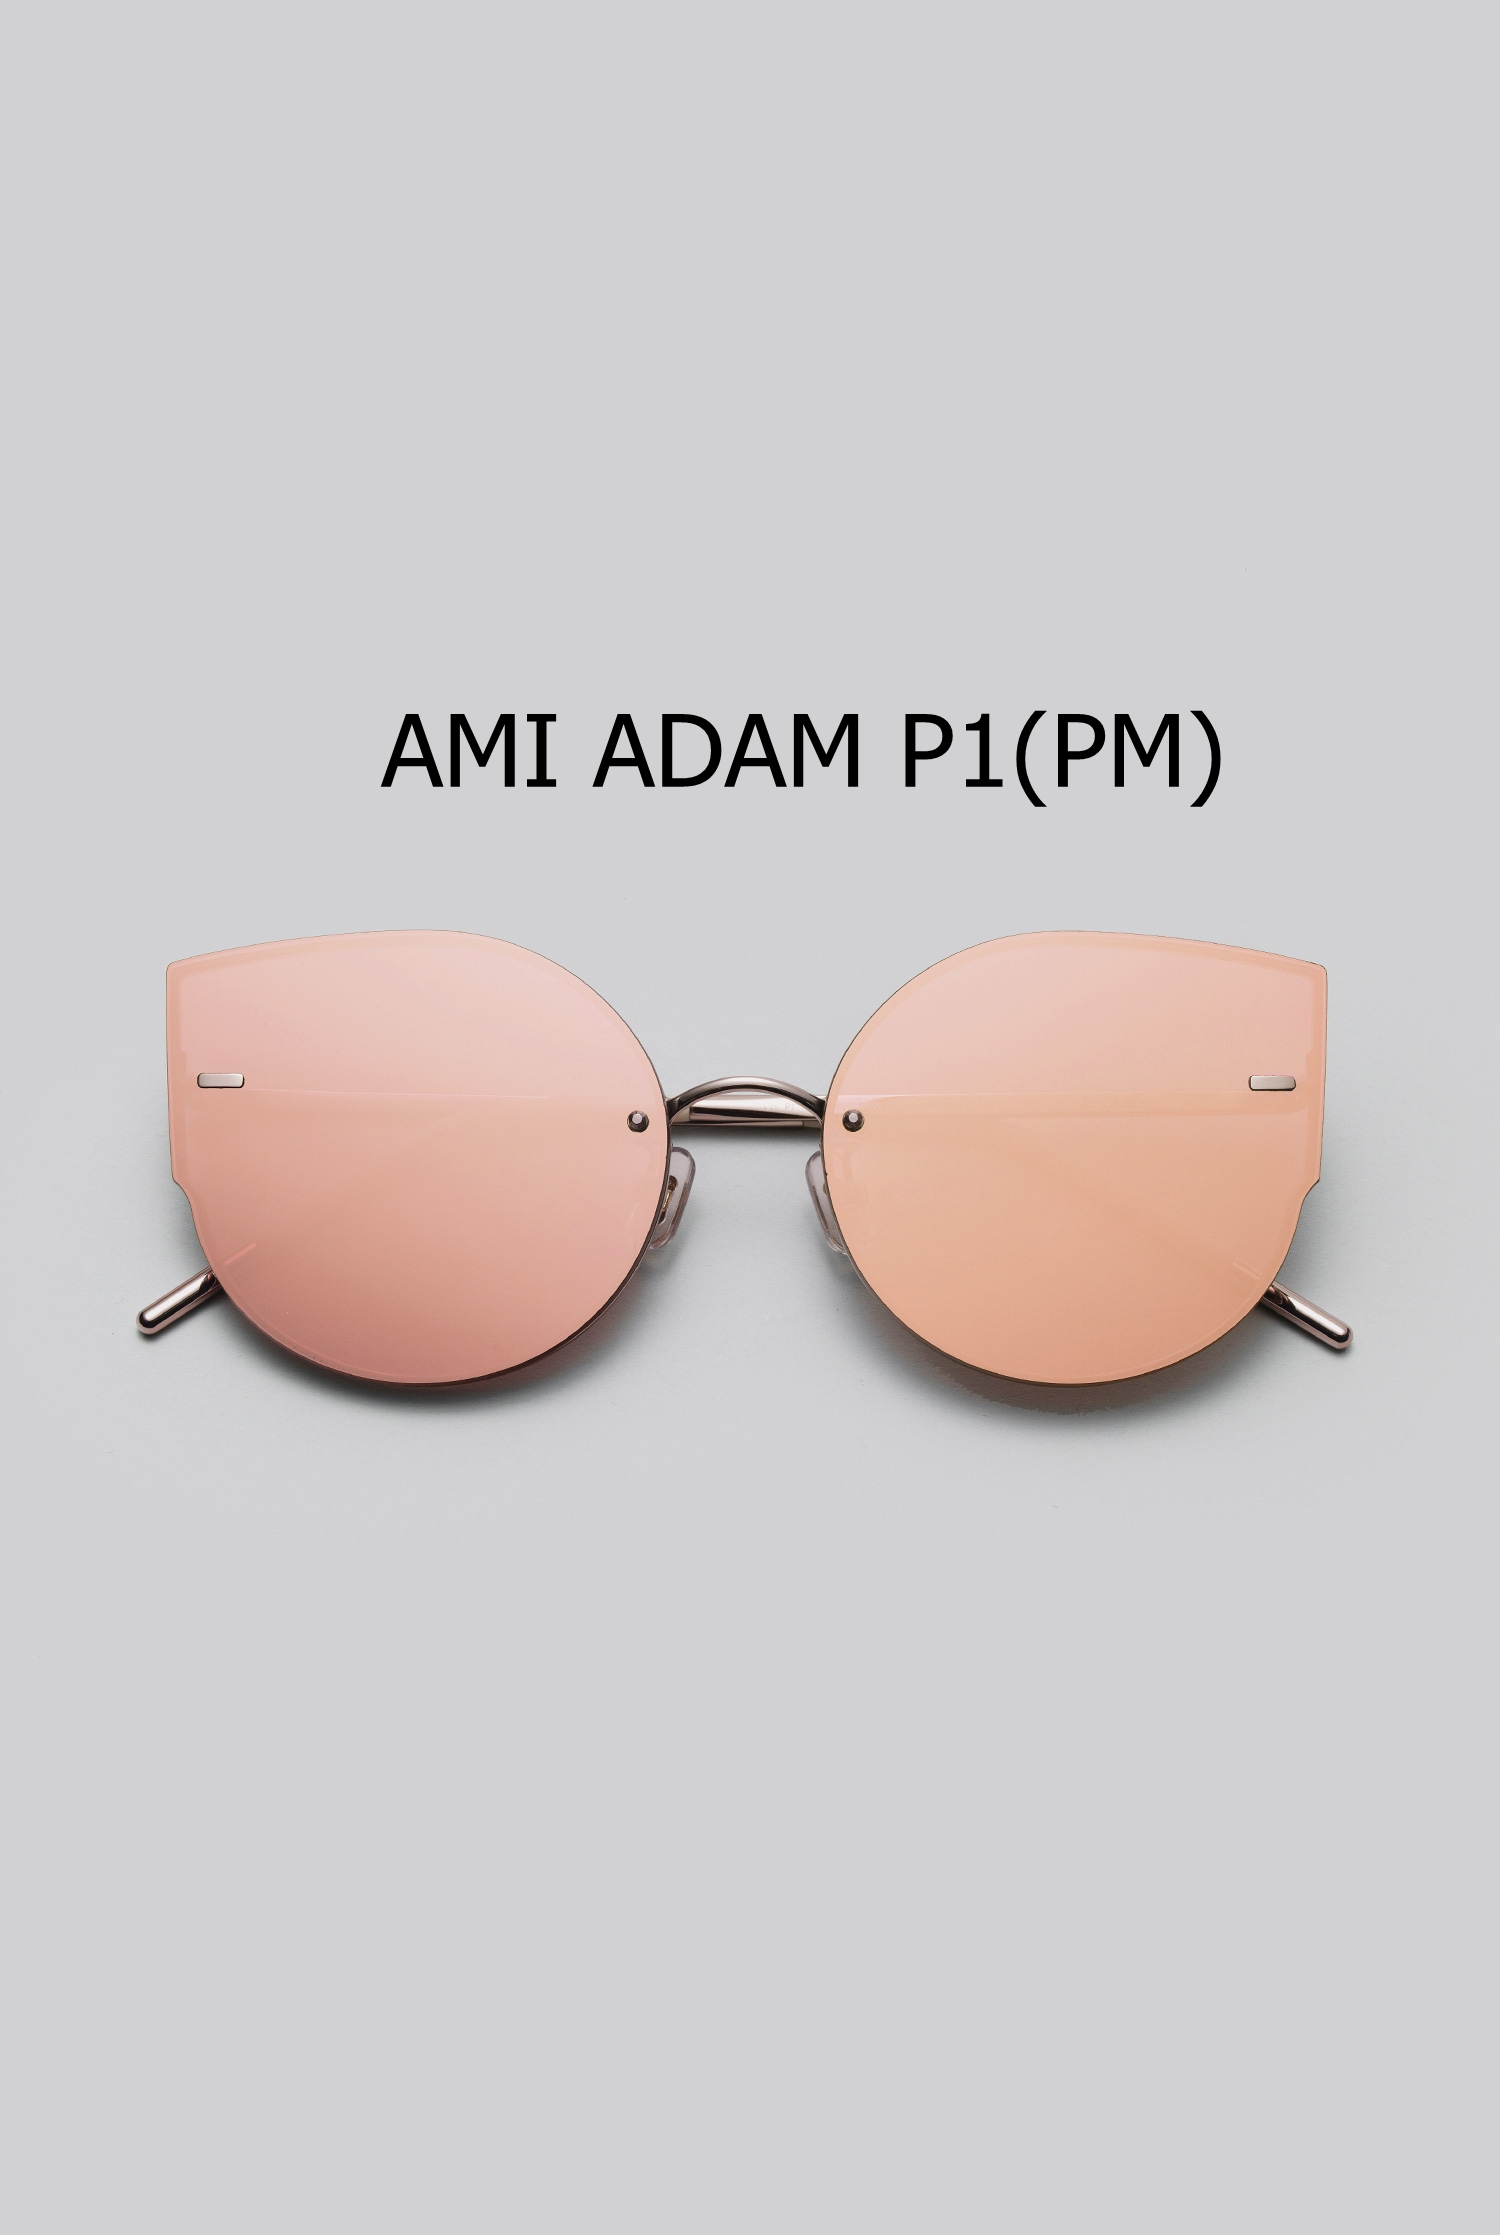 AMI ADAM P1(PM)